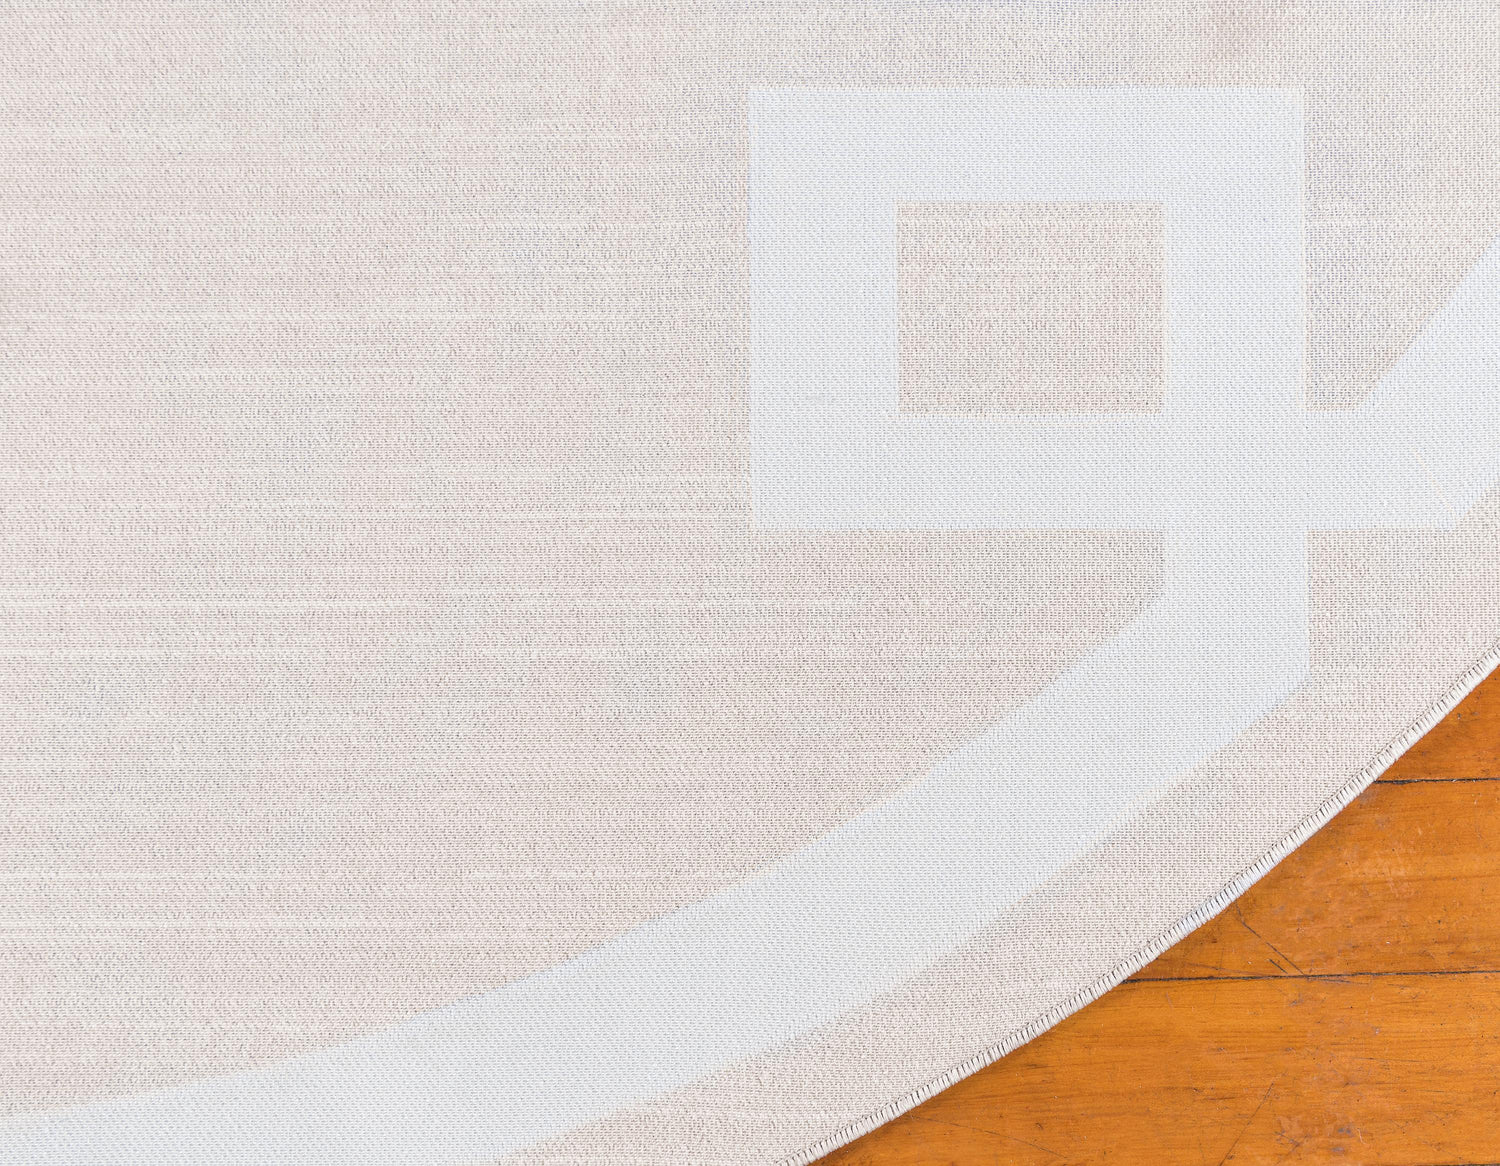 Dangelo - Modern European Border Rug - Nordic Side - abstract-rug, Area-rug, feed-cl0-over-80-dollars, geometric-rug, hallway-runner, large-rug, modern, modern-nordic, modern-pieces, modern-r